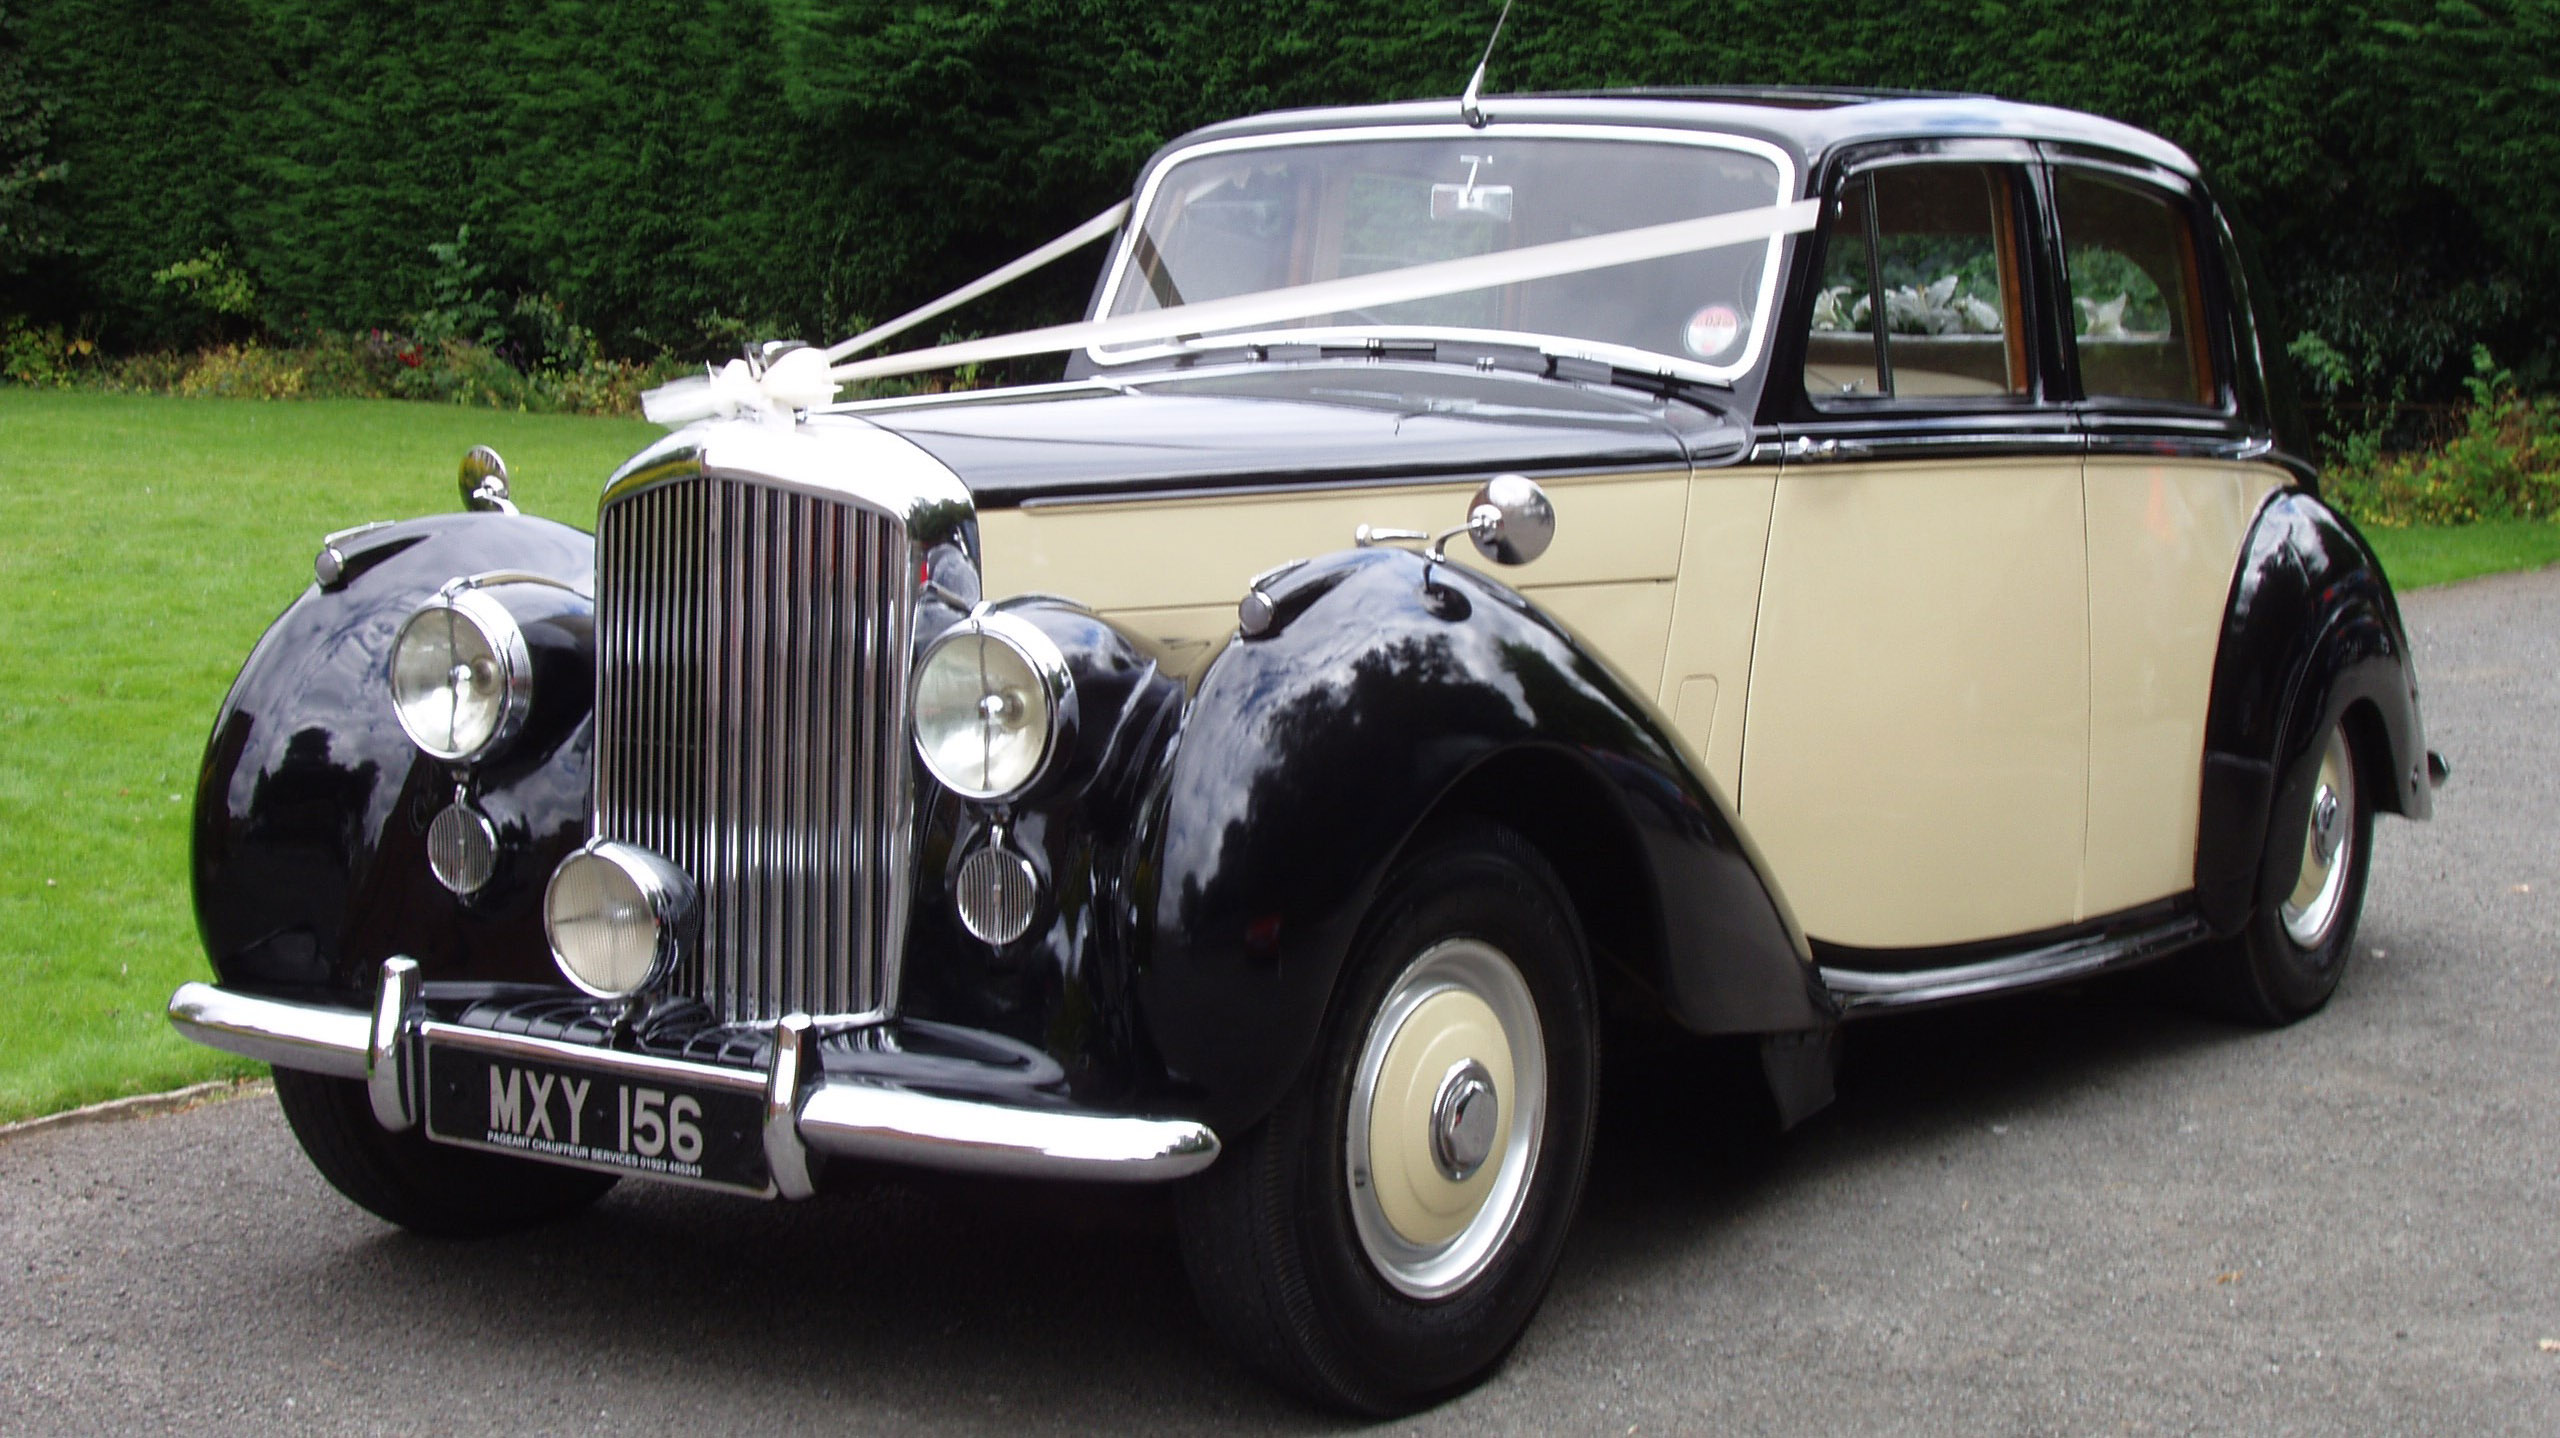 Bentley Mk6 wedding car for hire in Aylesbury, Buckinghamshire